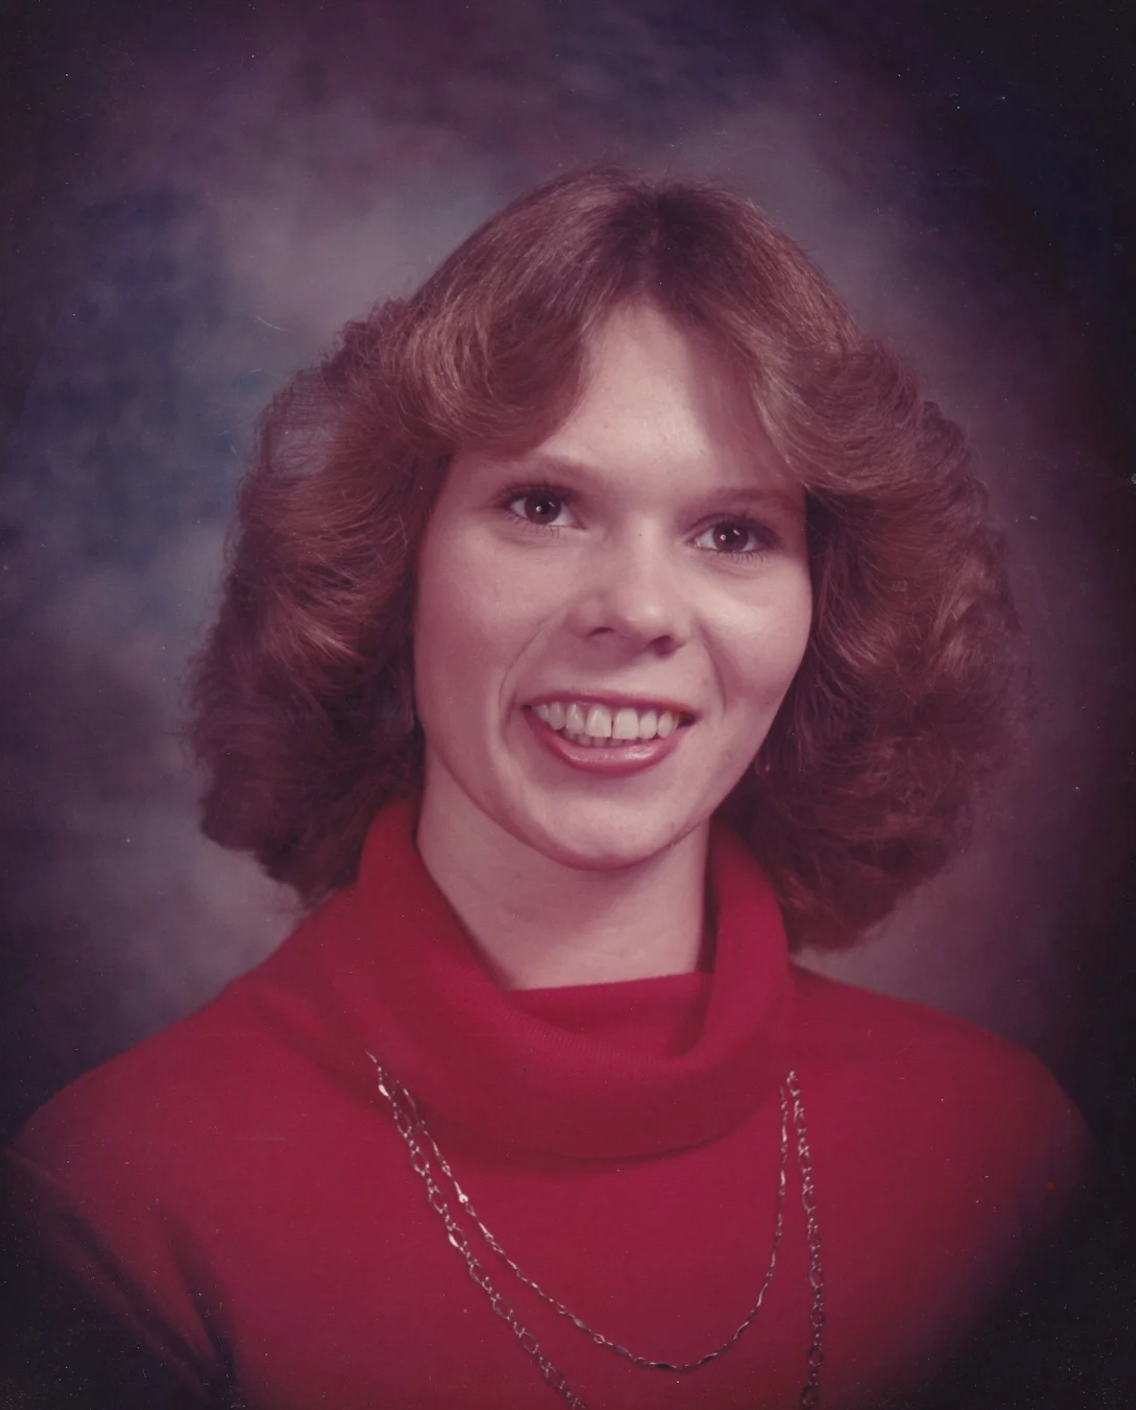 Barbara Tucker, 19, was found dead on January 15, 1980